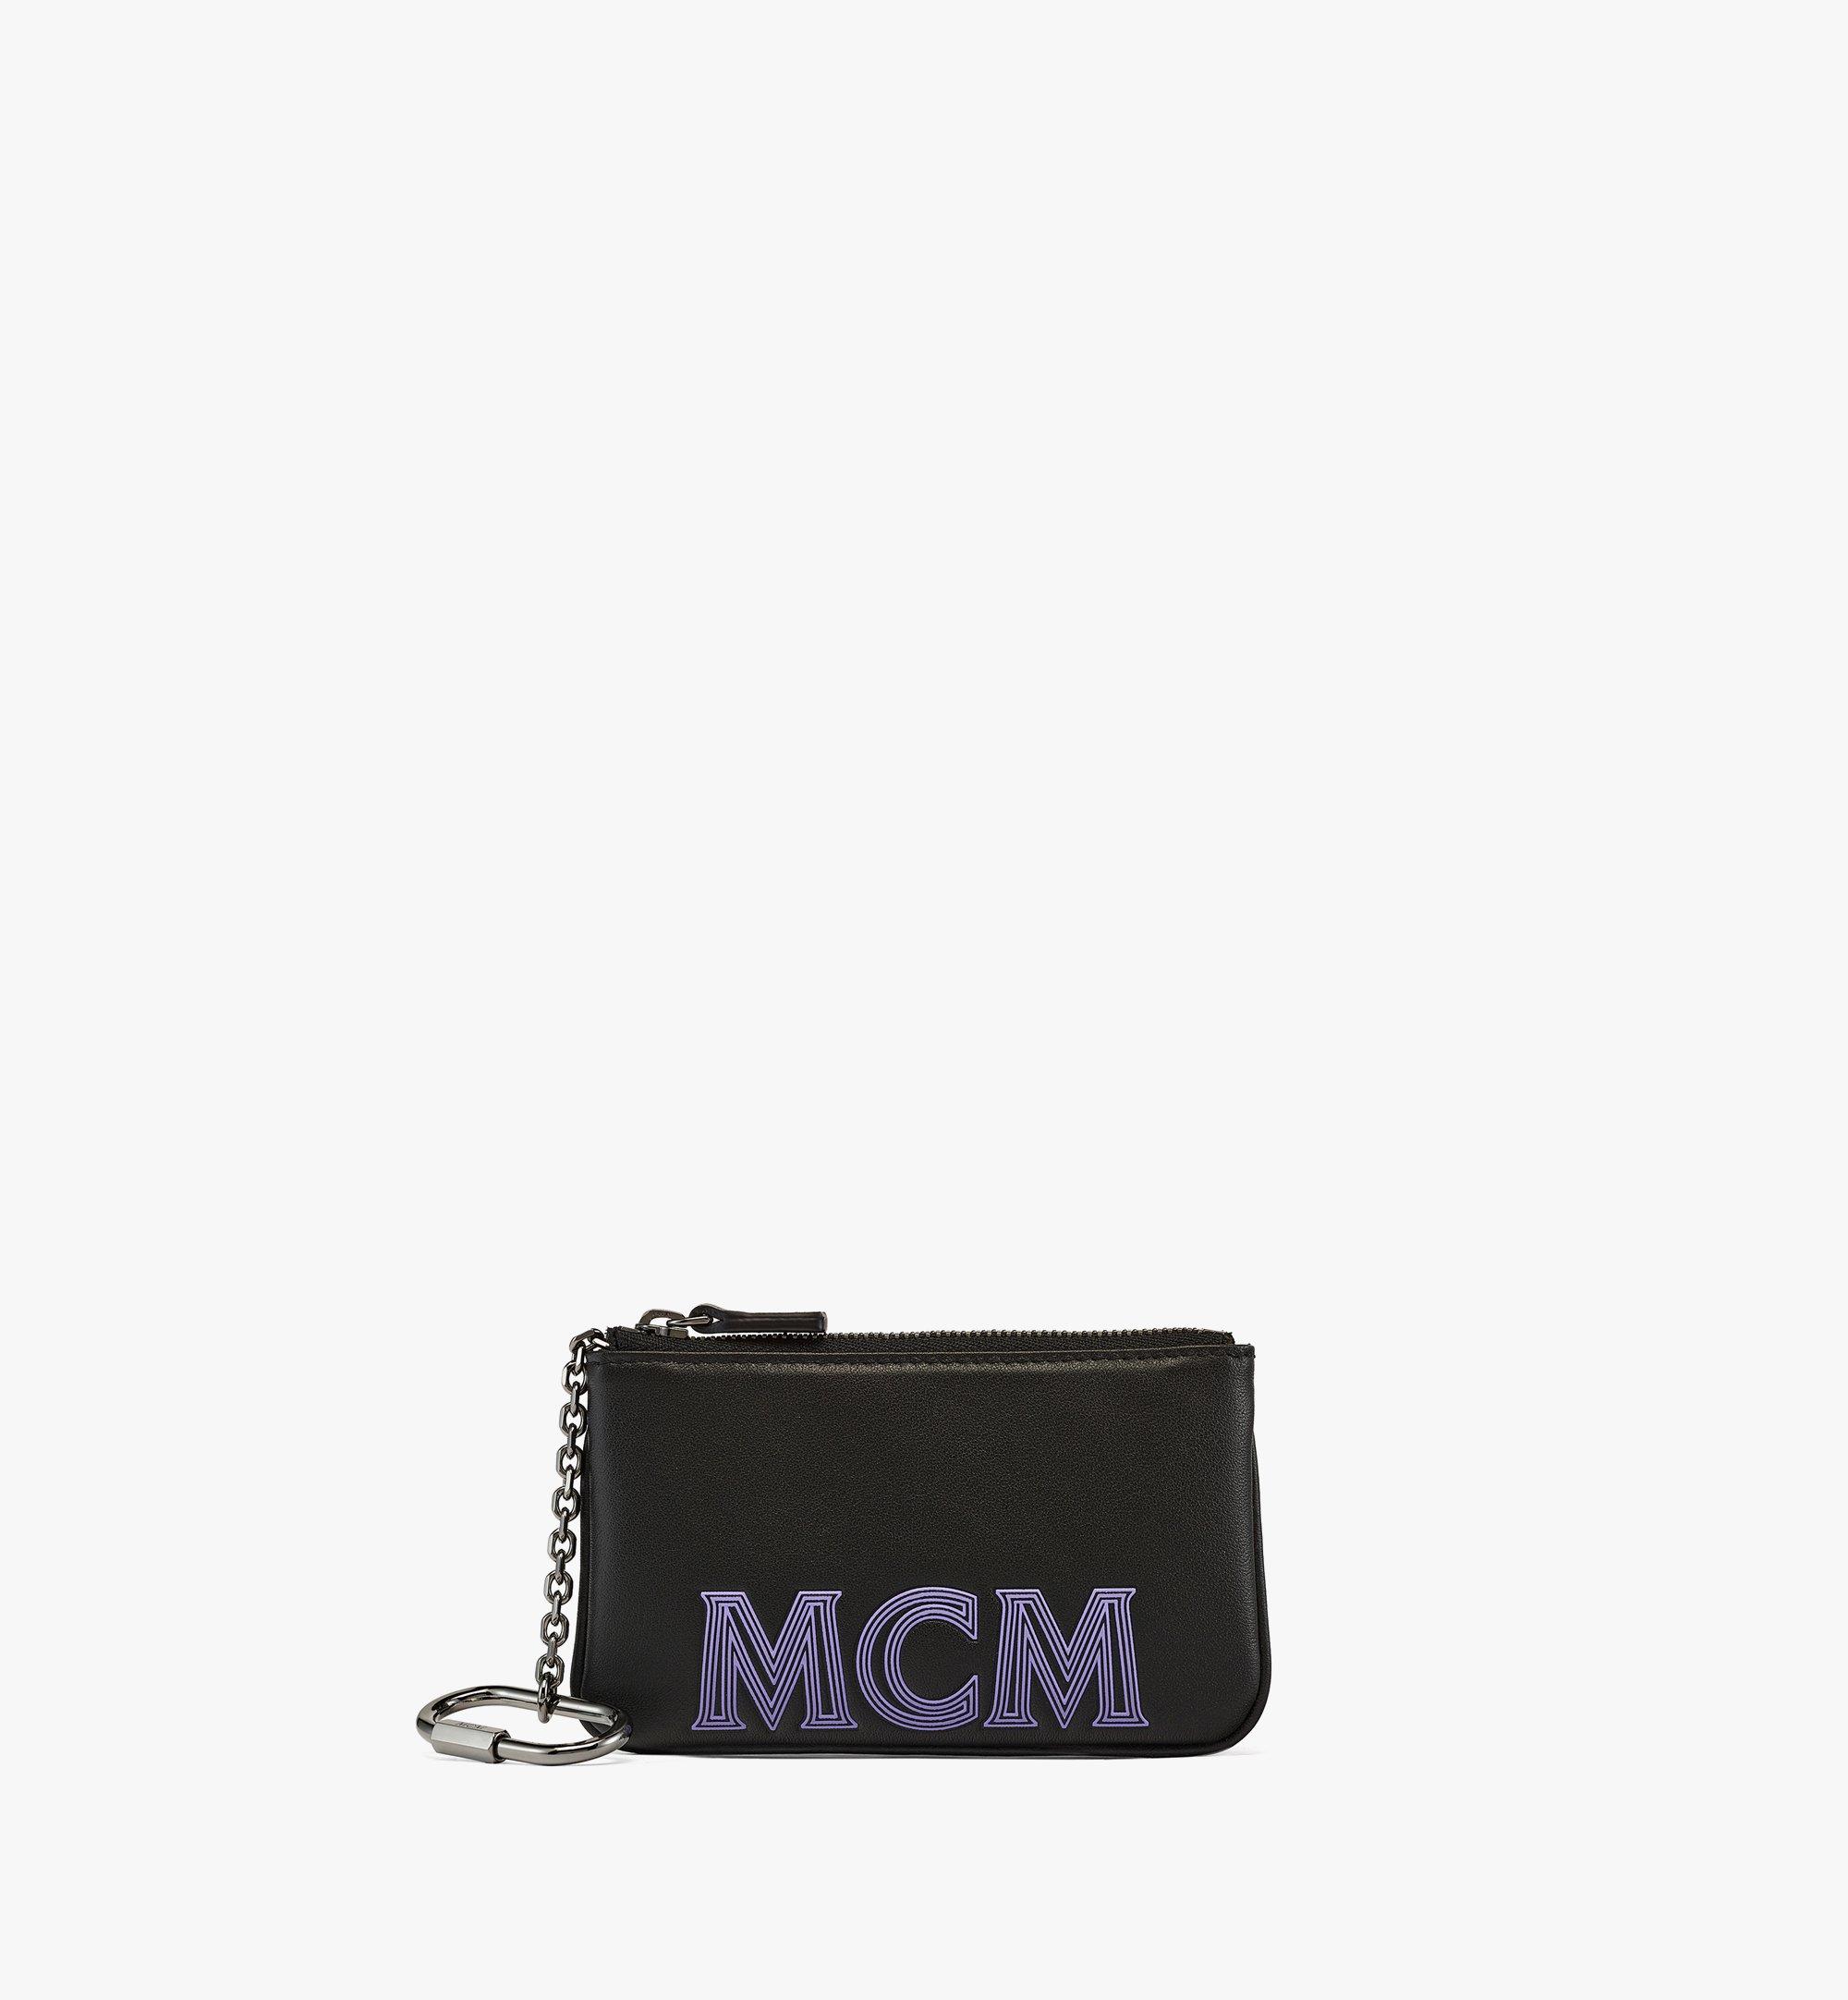 MCM MCM 皮革鑰匙零錢包 Black MXKCSSX02BK001 更多視圖 1